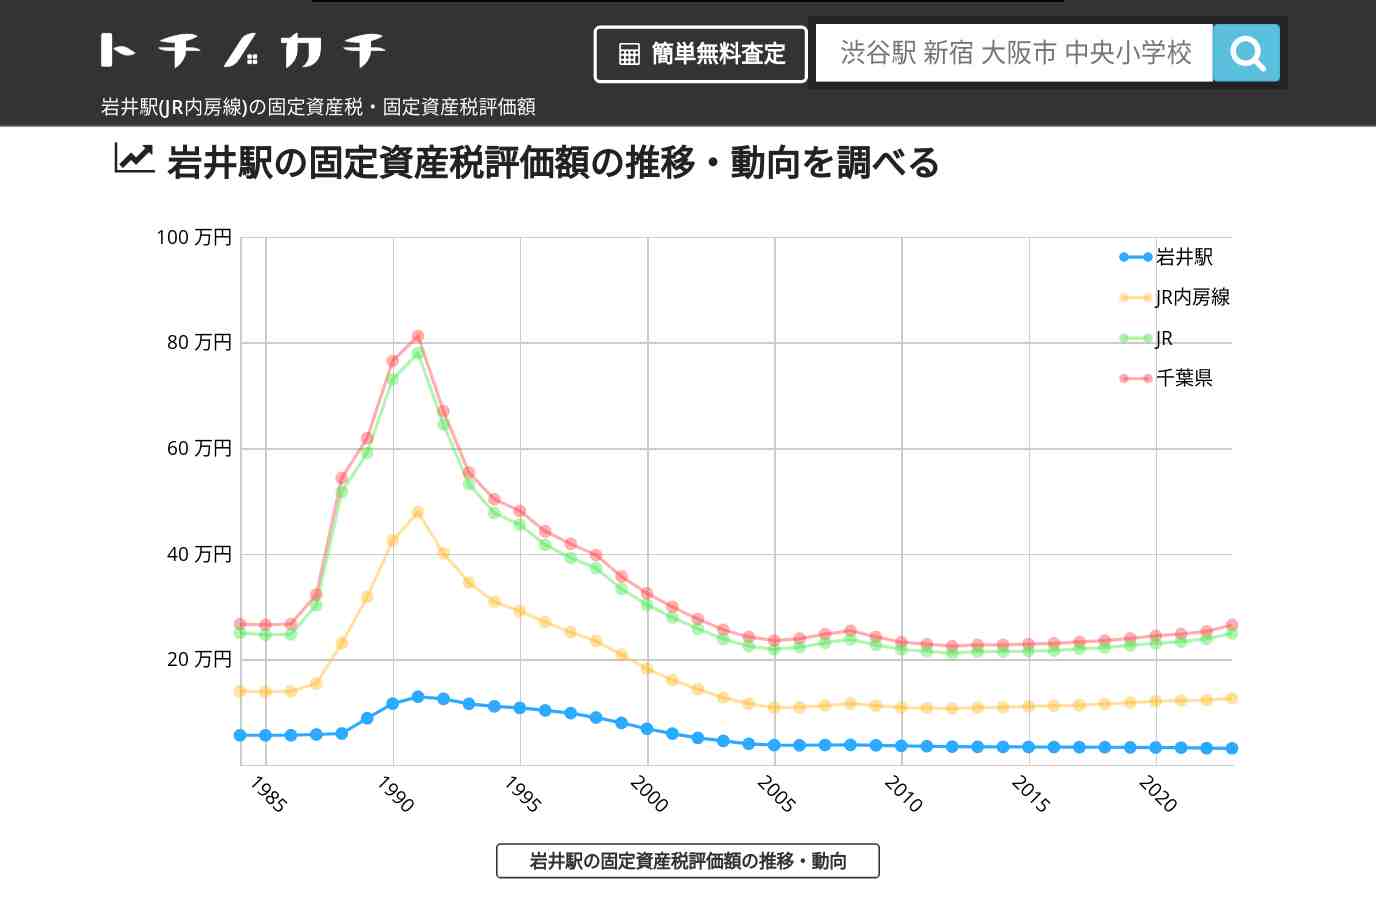 岩井駅(JR内房線)の固定資産税・固定資産税評価額 | トチノカチ